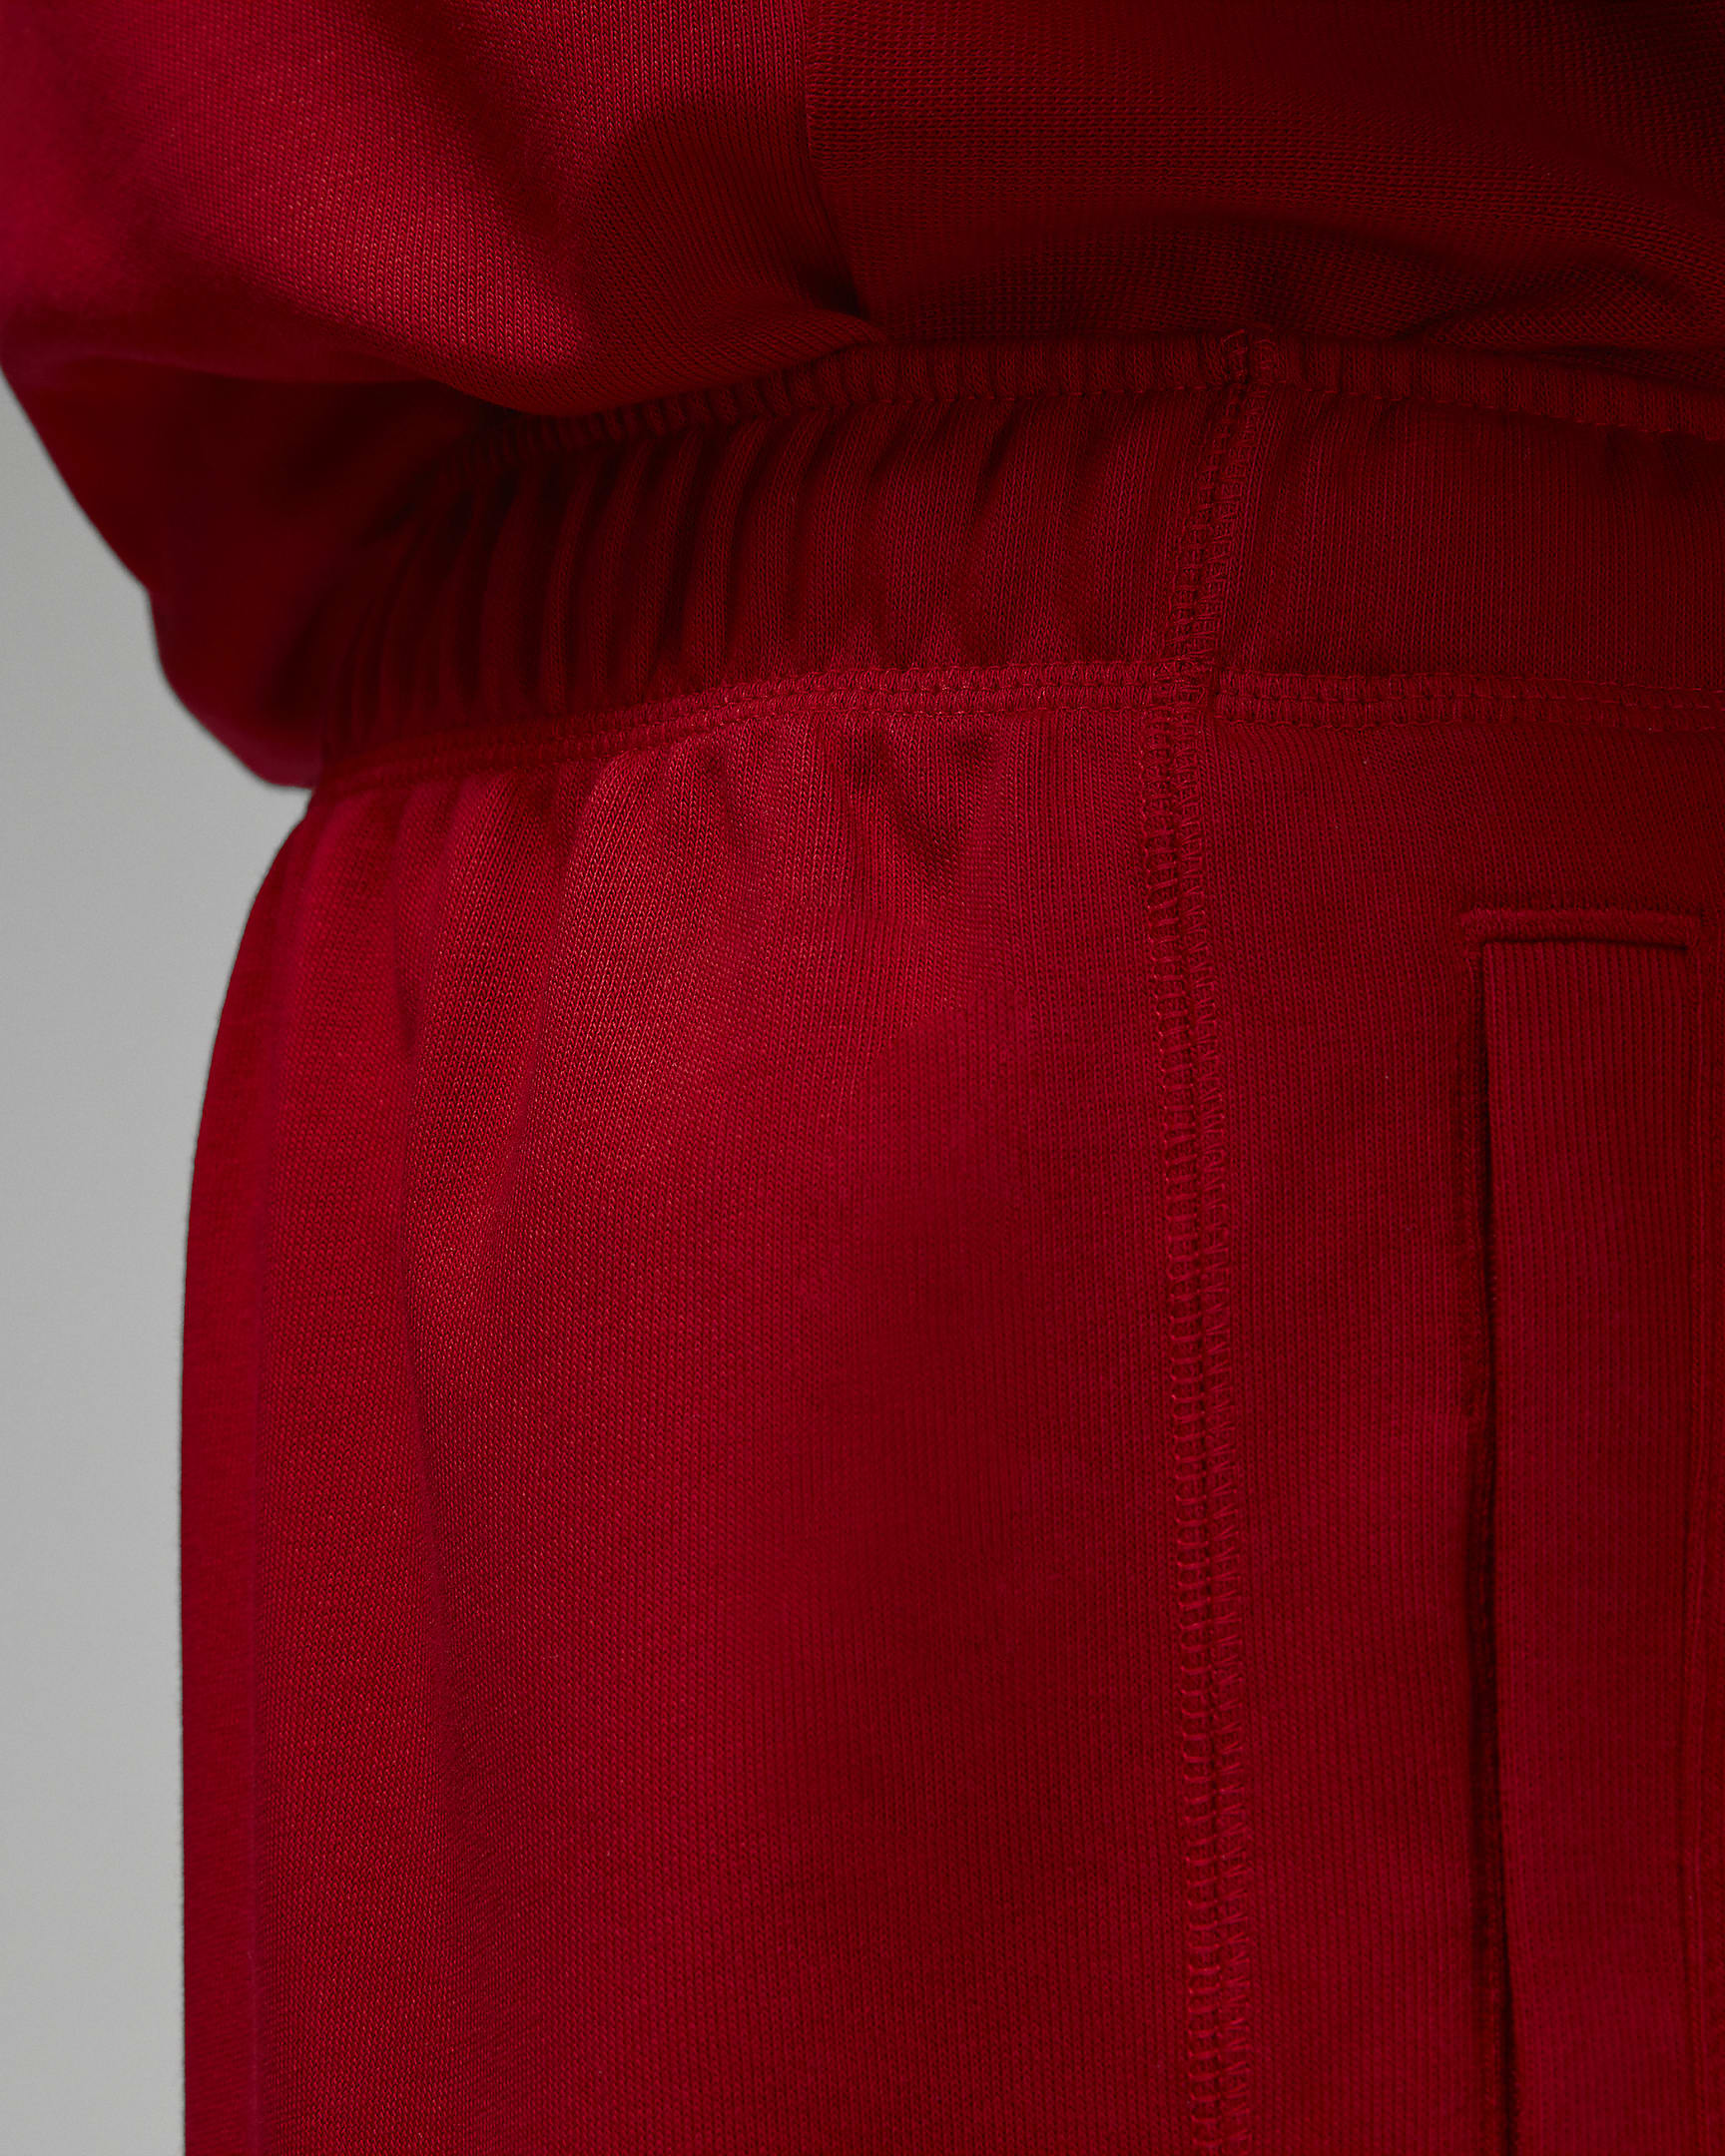 Jordan Dri-FIT Sport Men's Fleece Trousers - Gym Red/Black